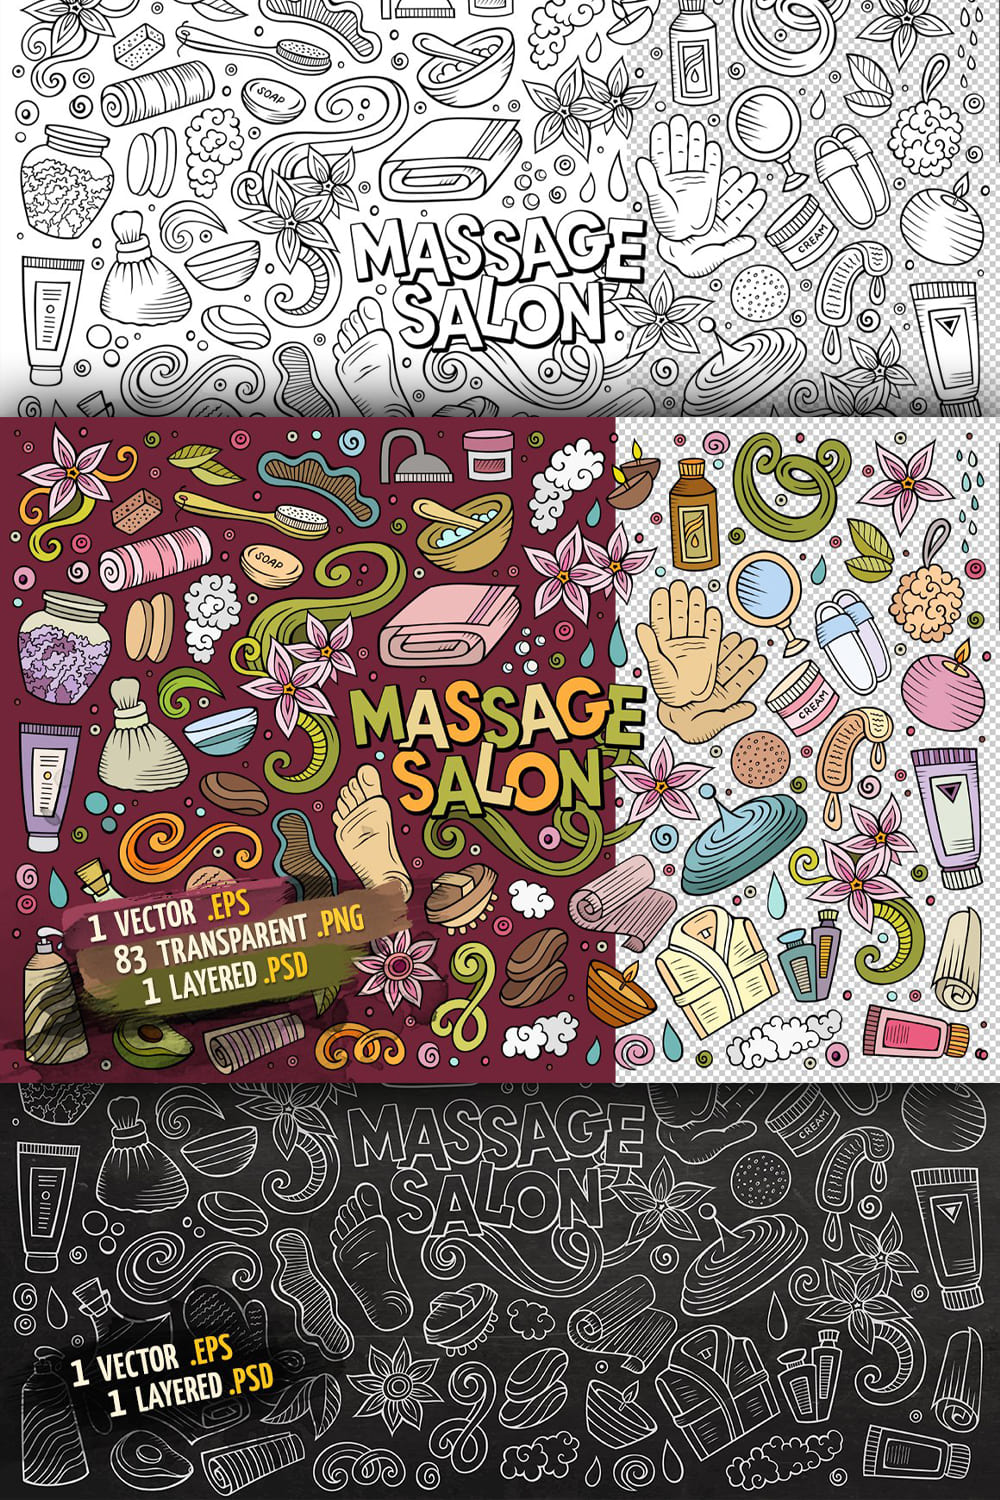 Massage Objects Elements Set Pinterest 1000 1500.